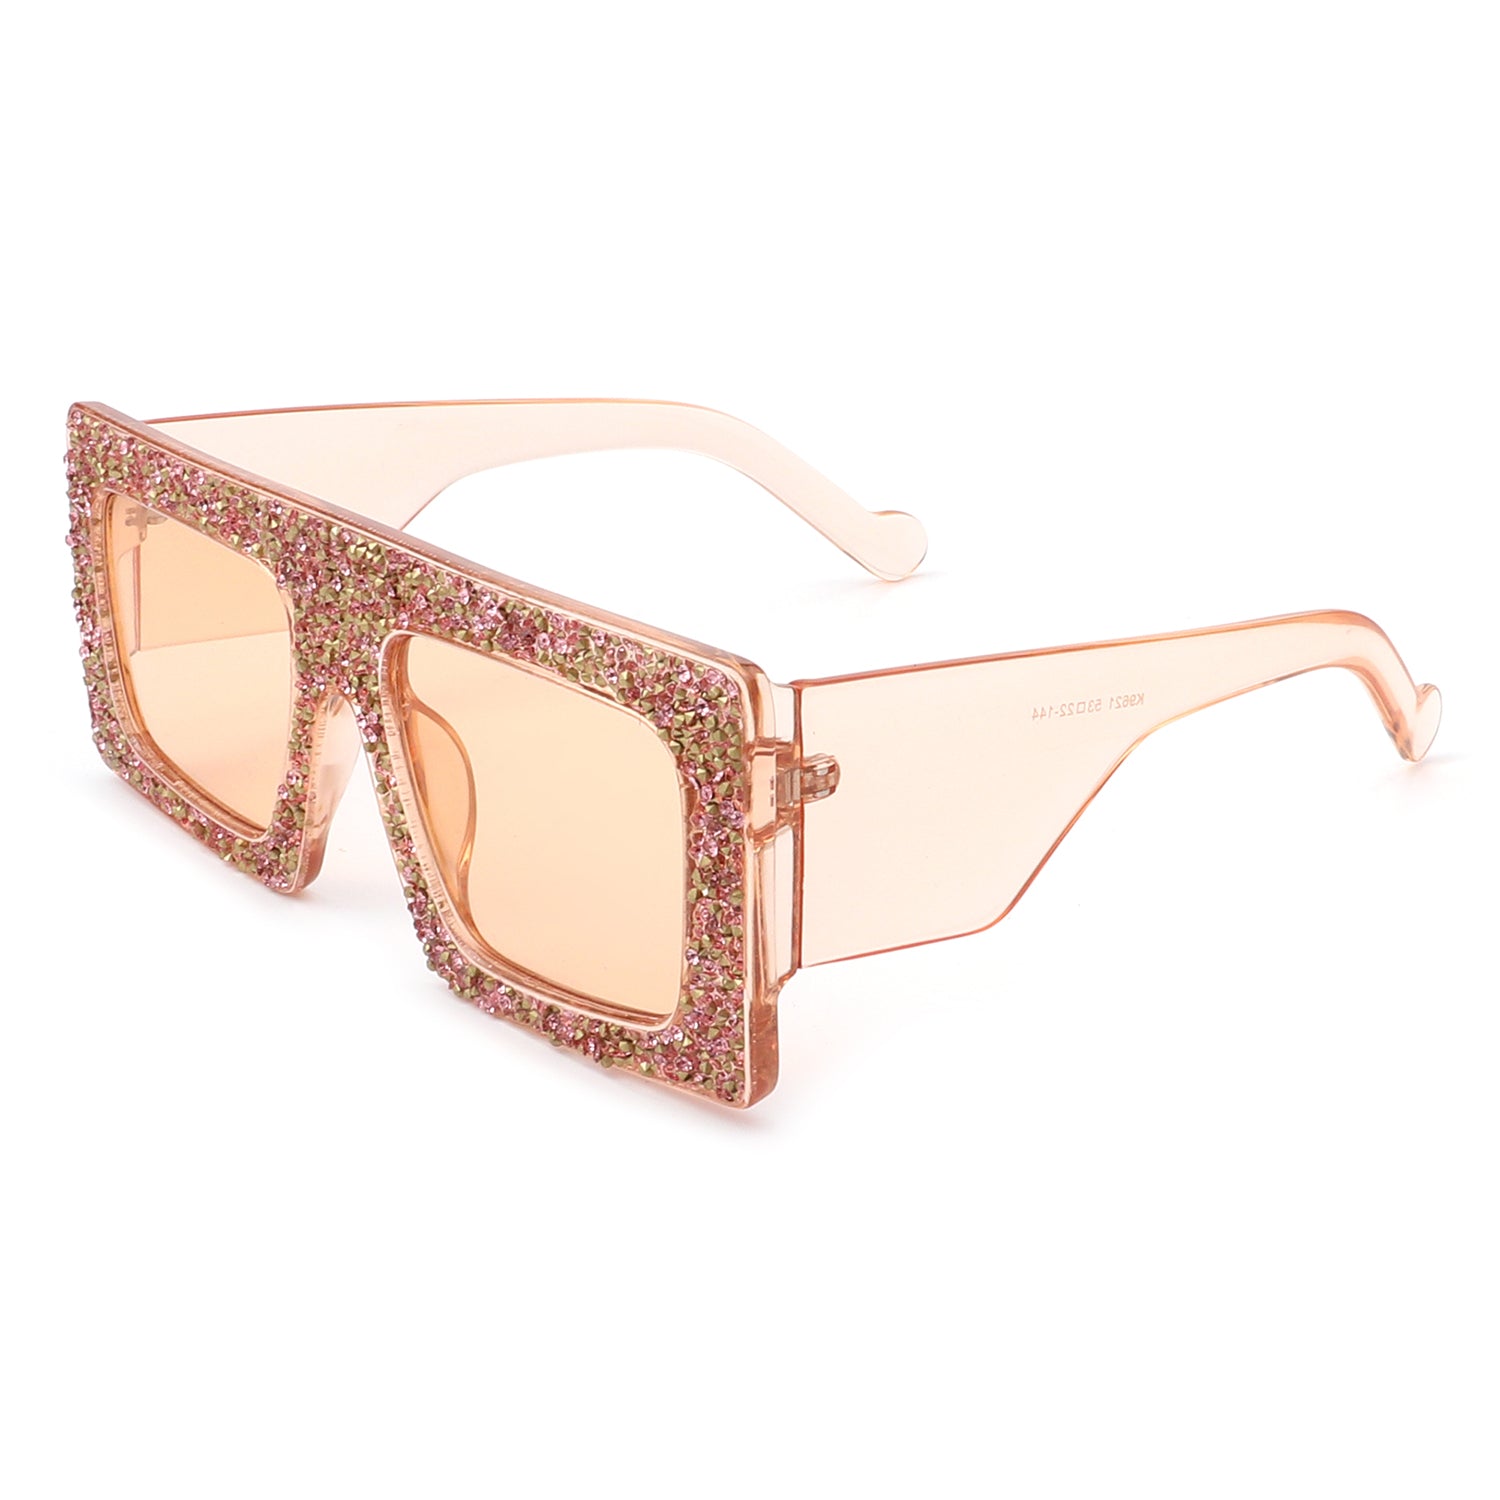 HS3006 - Square Bold Retro Thick Vintage Designer Fashion Sunglasses